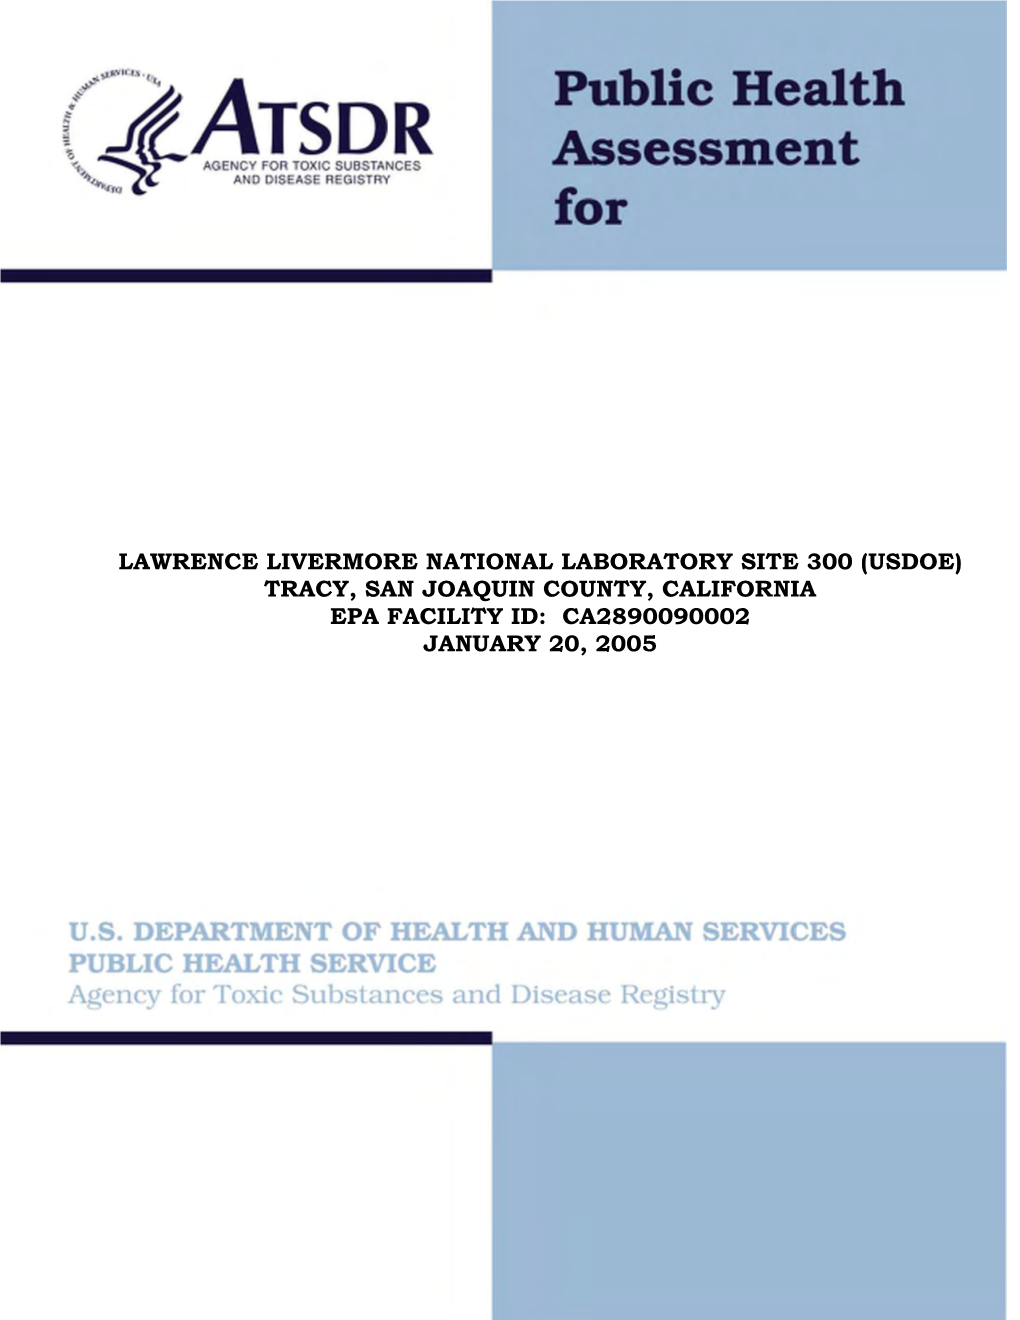 Lawrence Livermore National Laboratory Site 300 (Usdoe